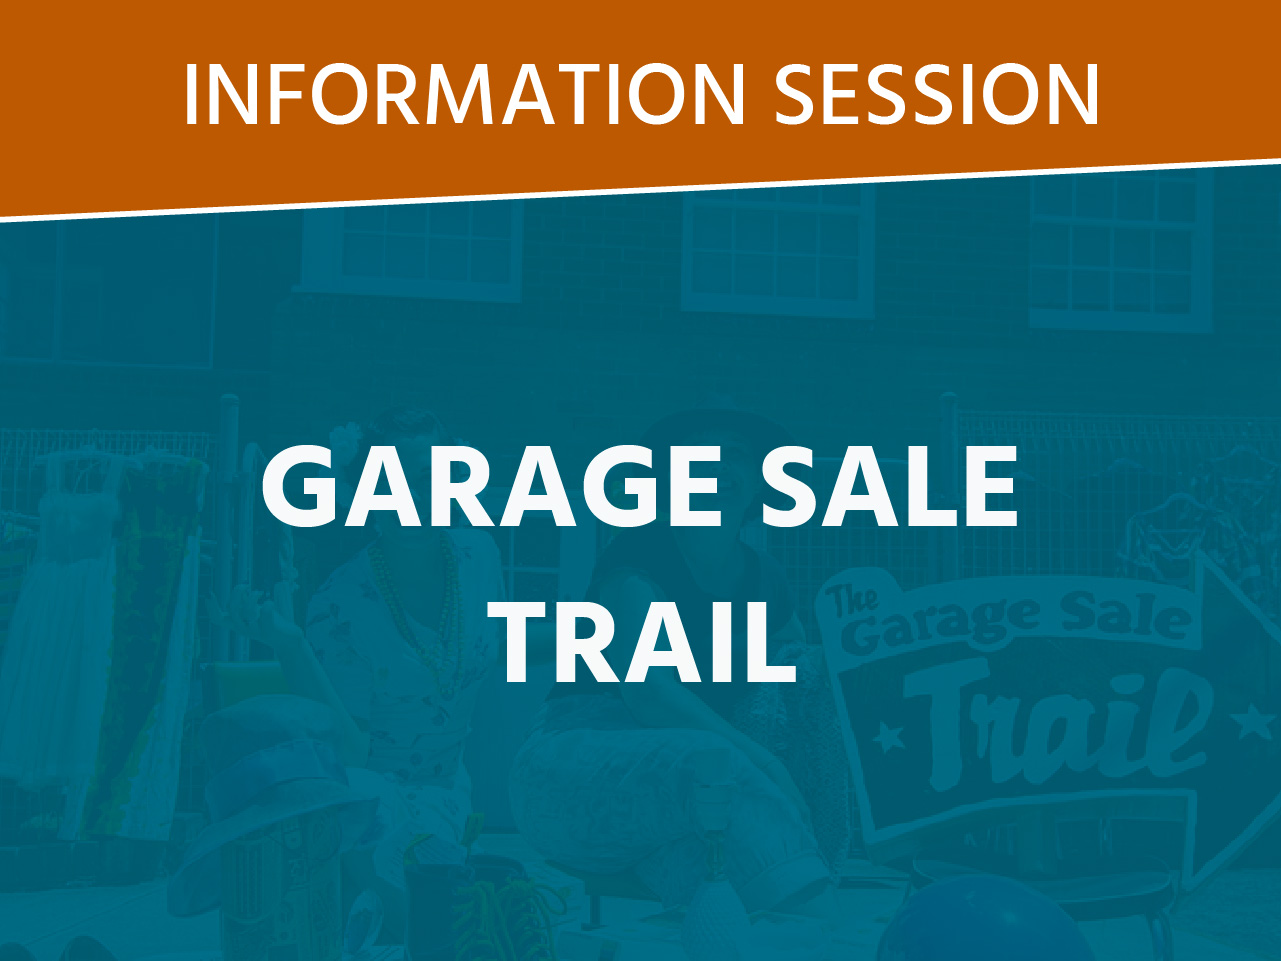 Garage Sale Trail Information Session